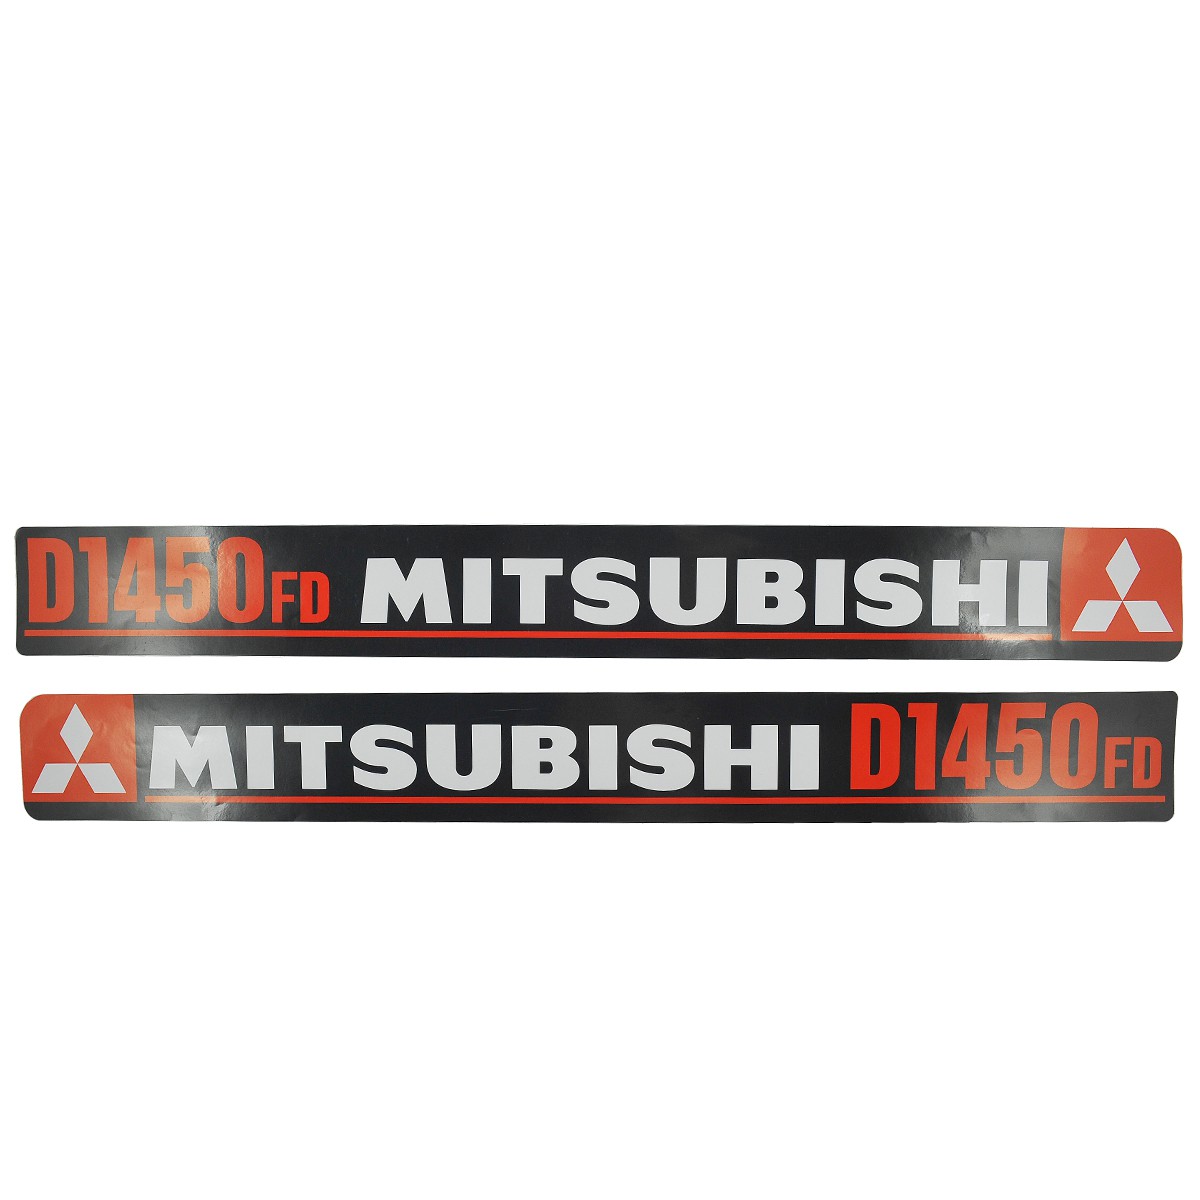 Mitsubishi D1450FD stickers